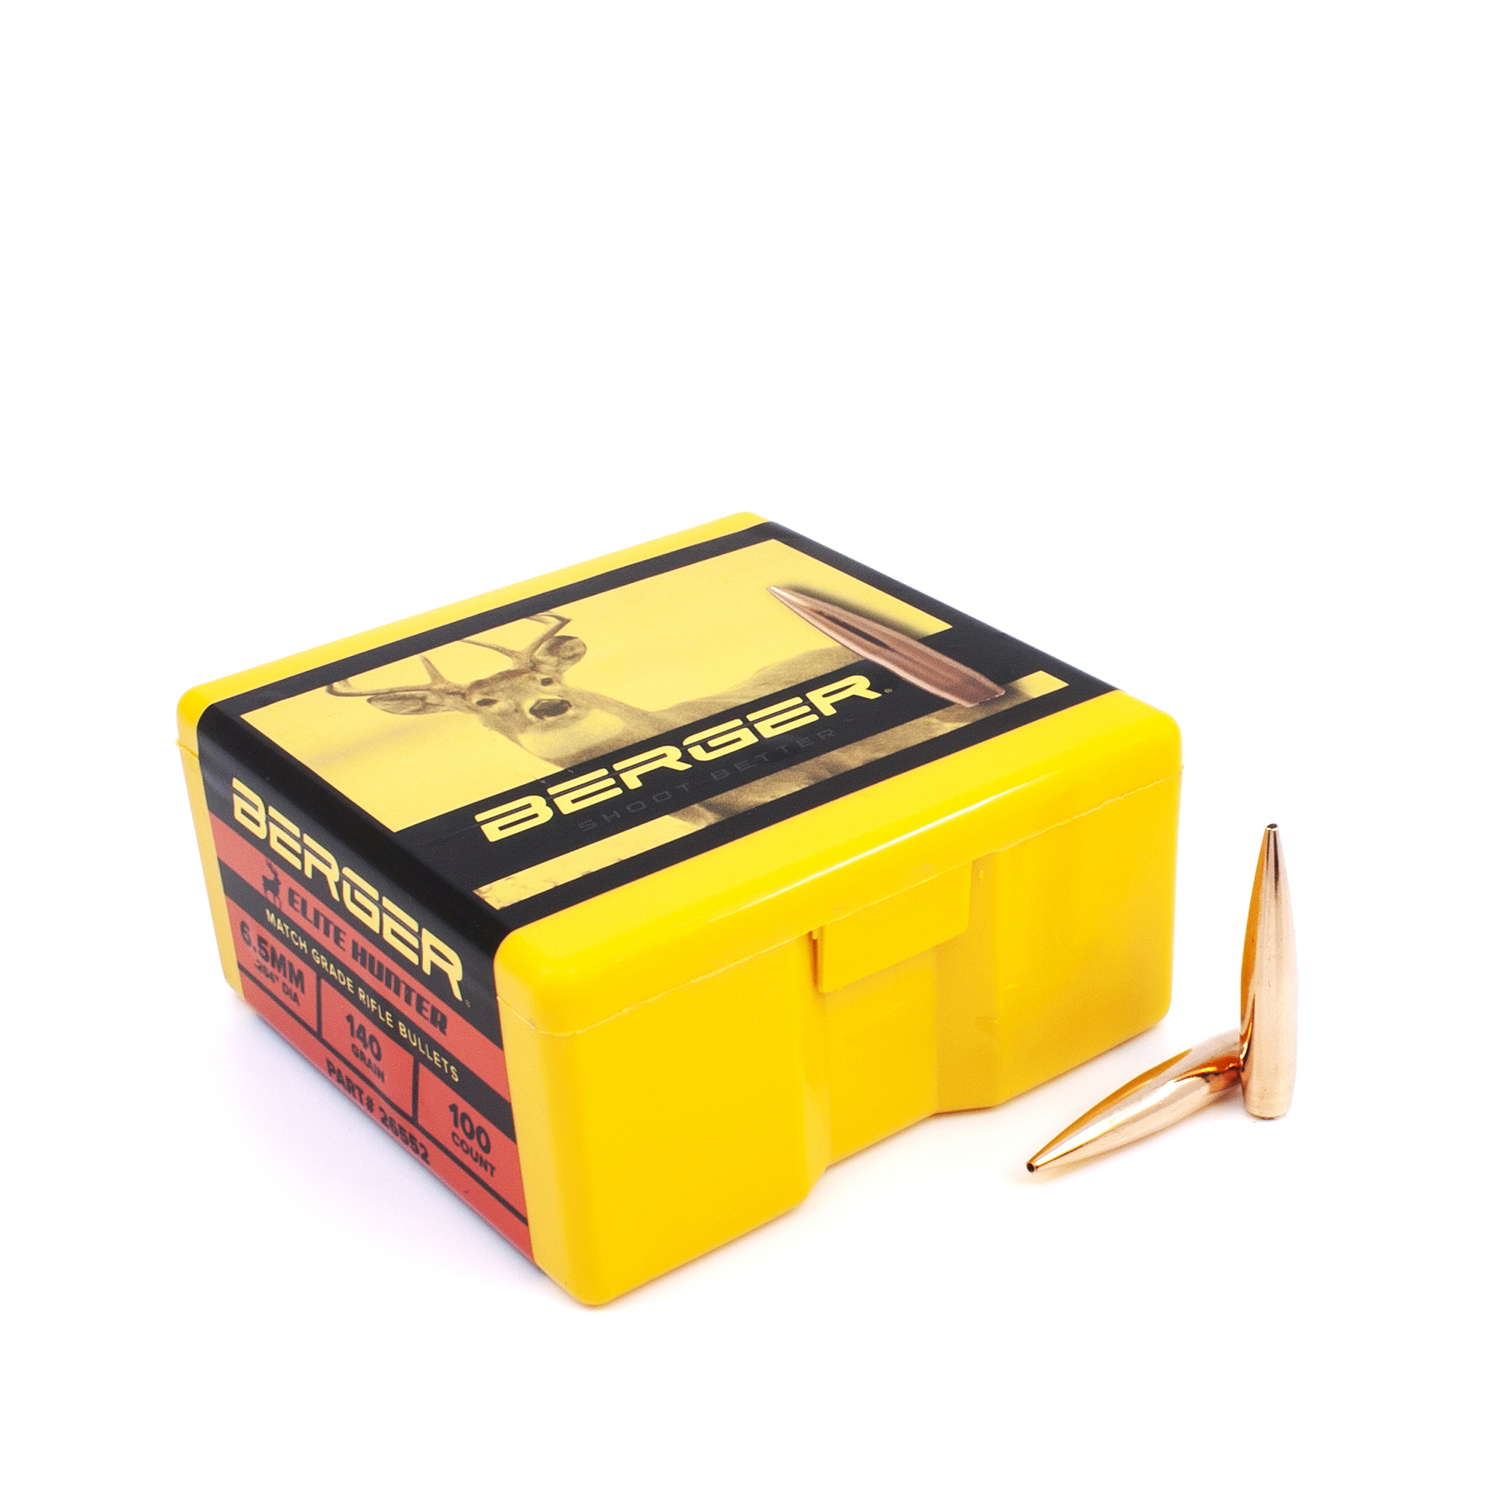 Berger Bullets - 6.5mm 140gr Elite Hunter - Box of 100